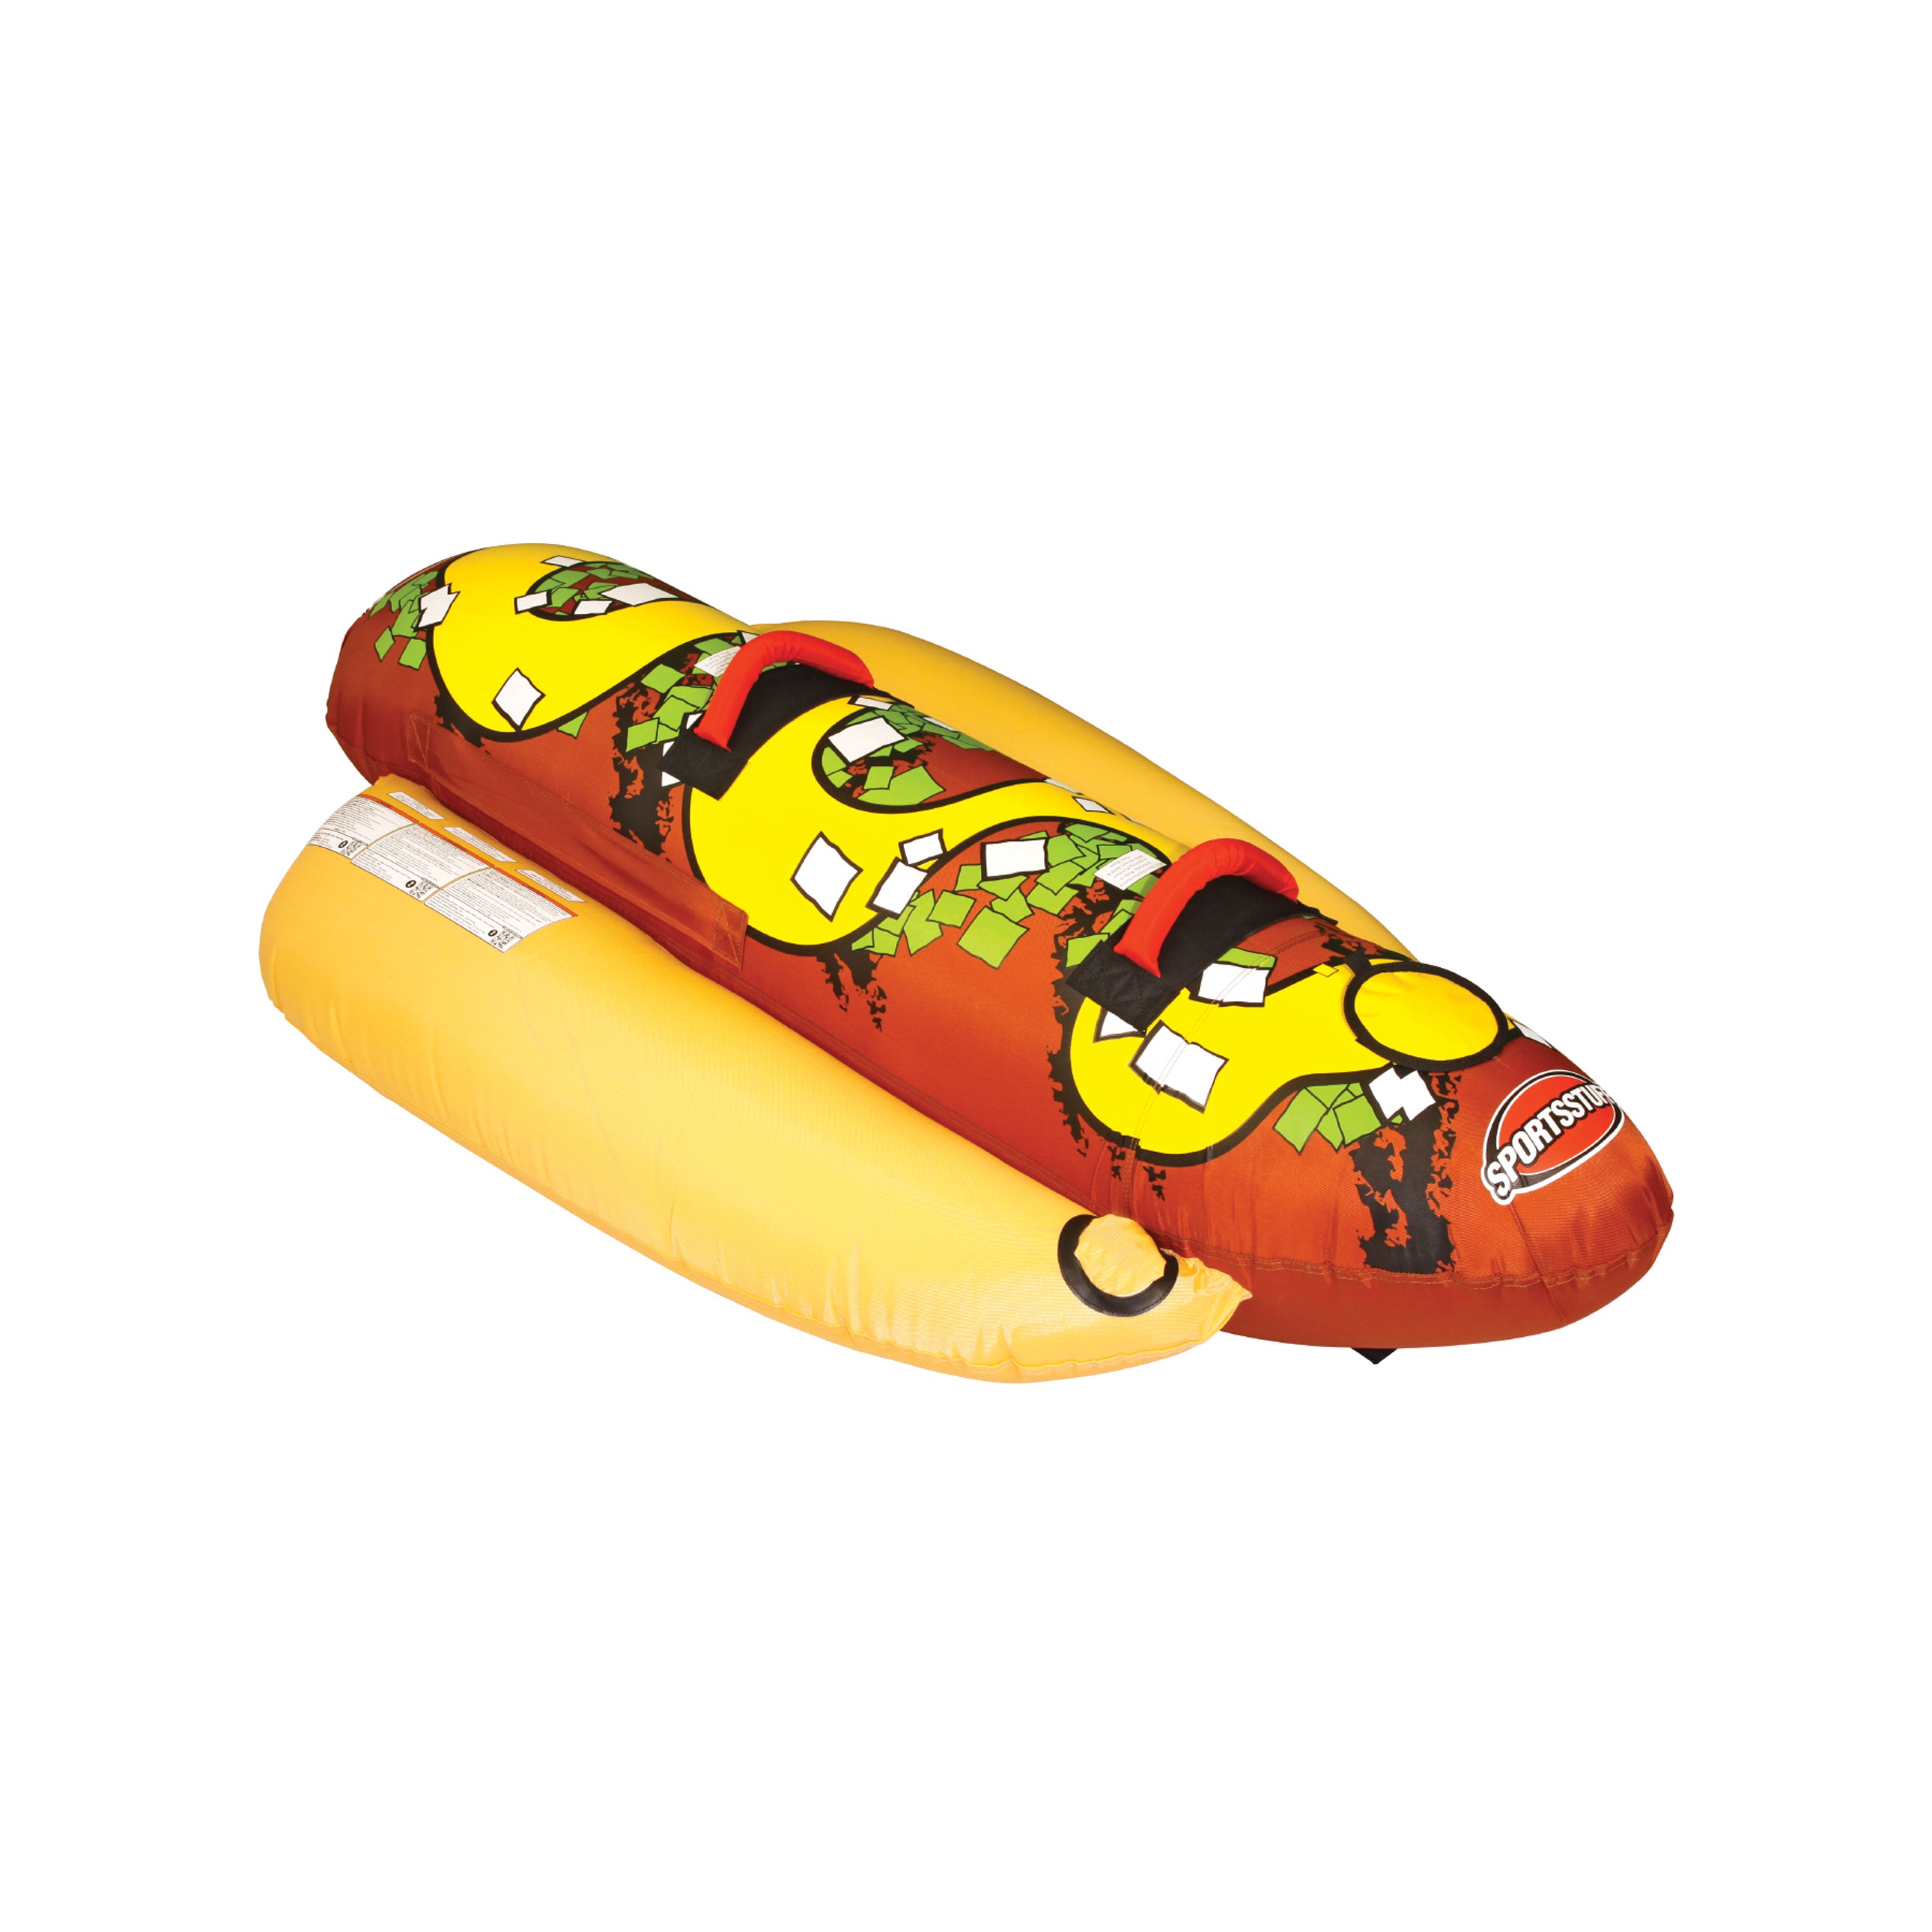 Sportsstuff 53-3060 Hot Dog 3 Inflatable Triple Rider Towable